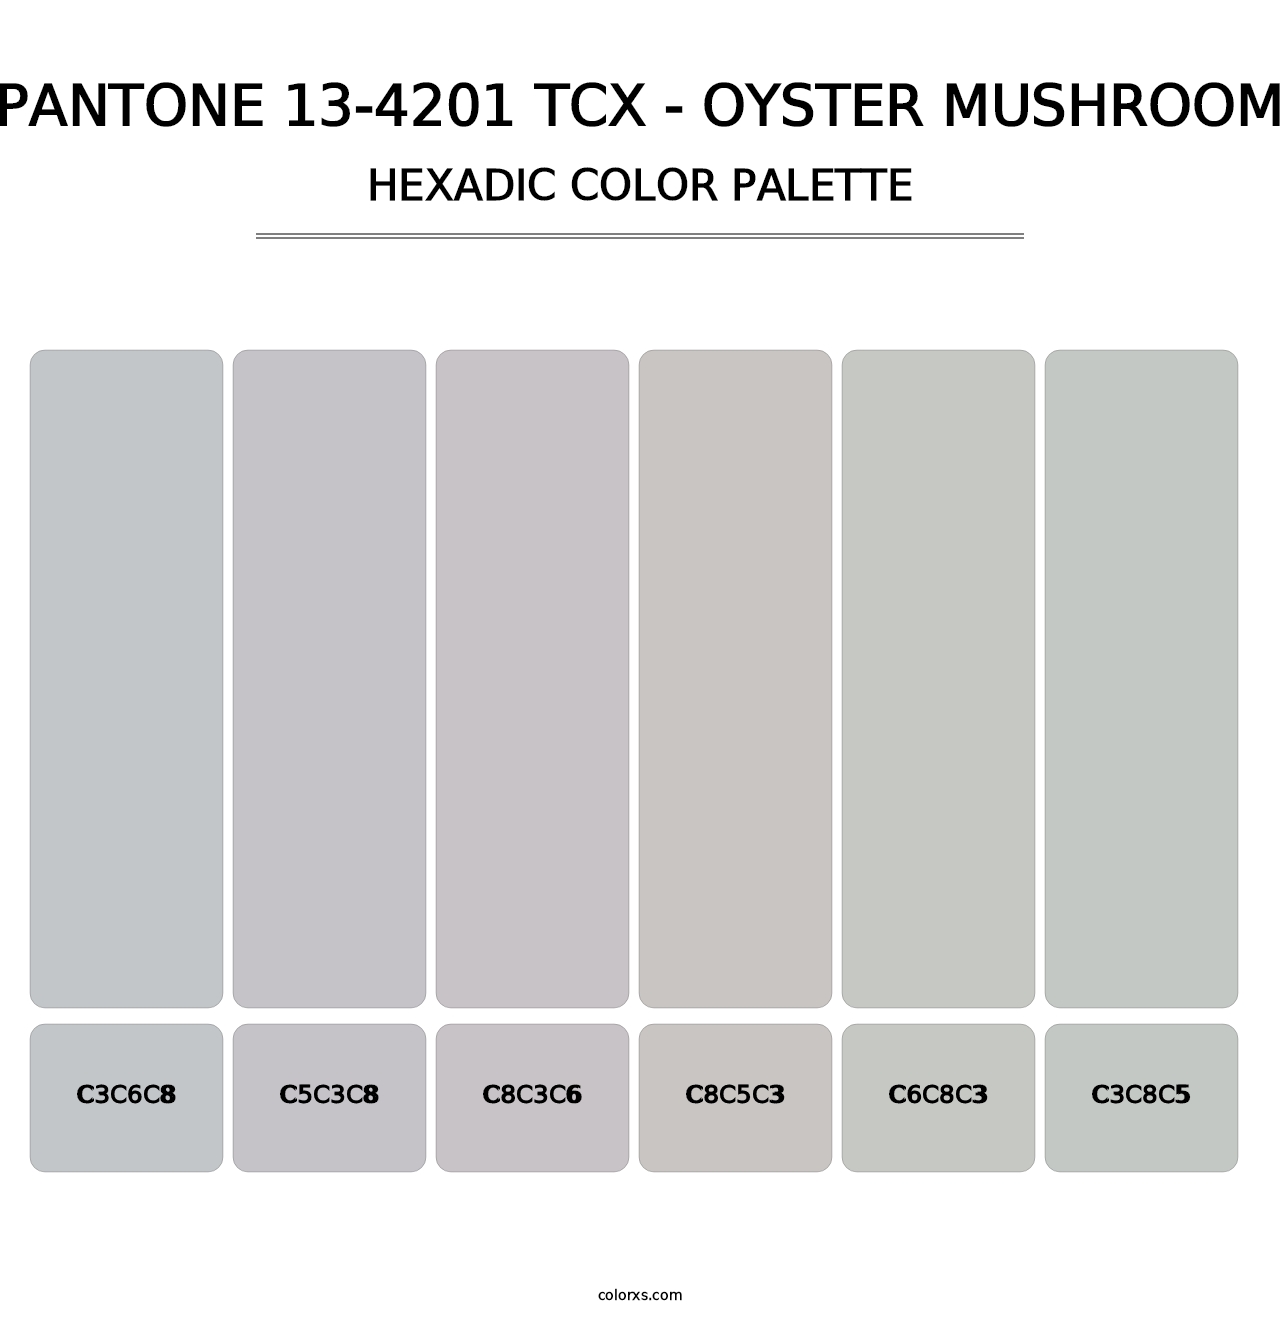 PANTONE 13-4201 TCX - Oyster Mushroom - Hexadic Color Palette